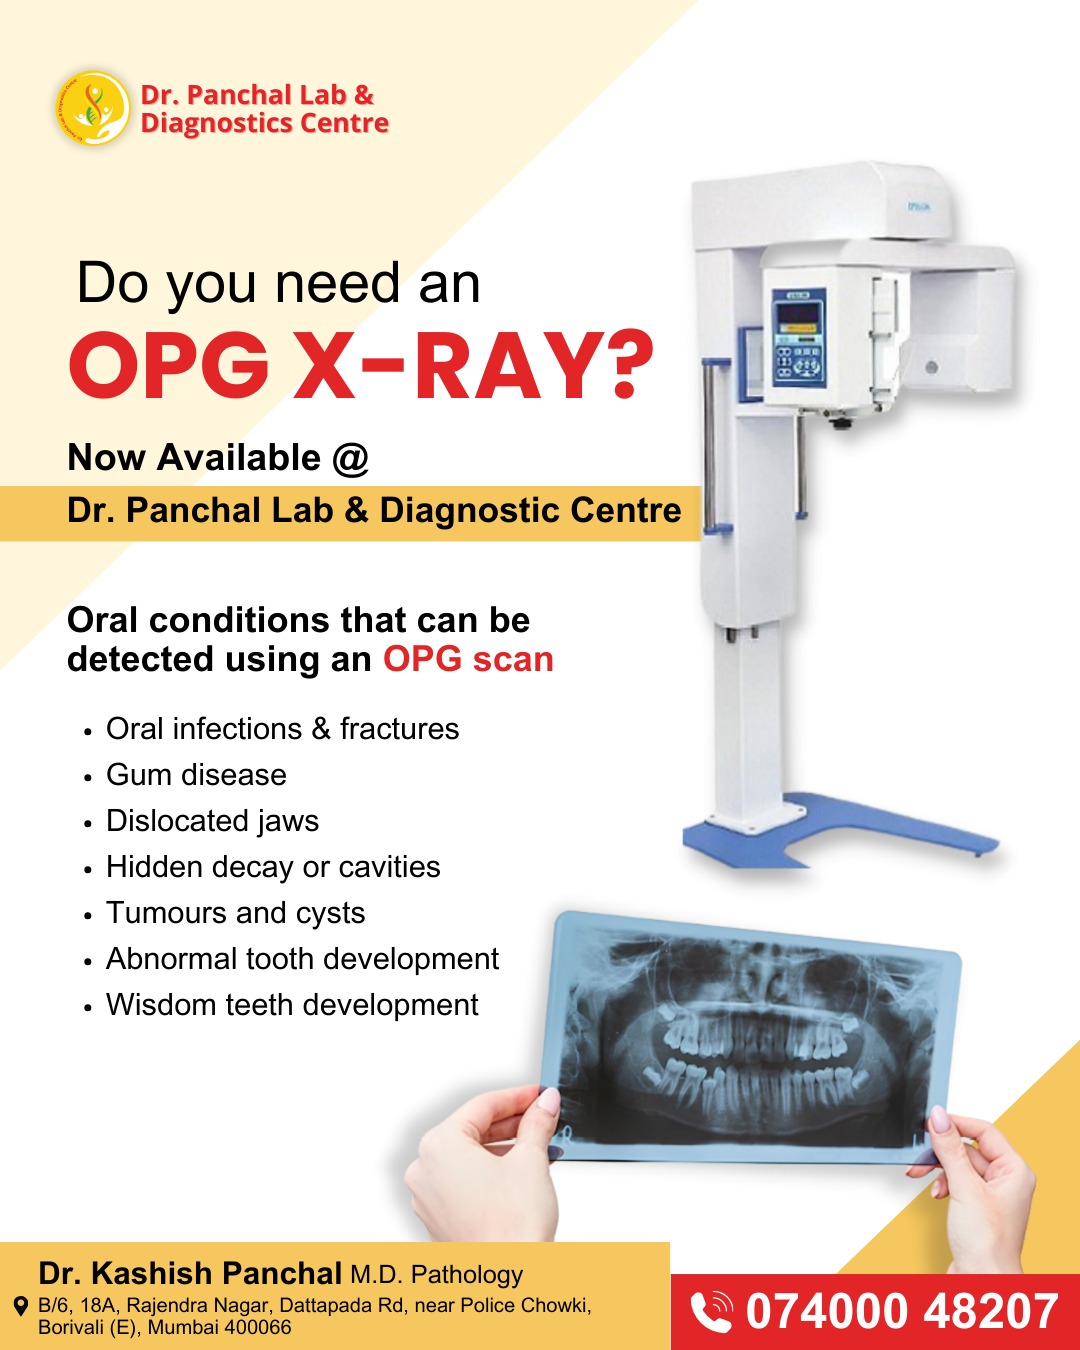 OPG Dental X-Ray